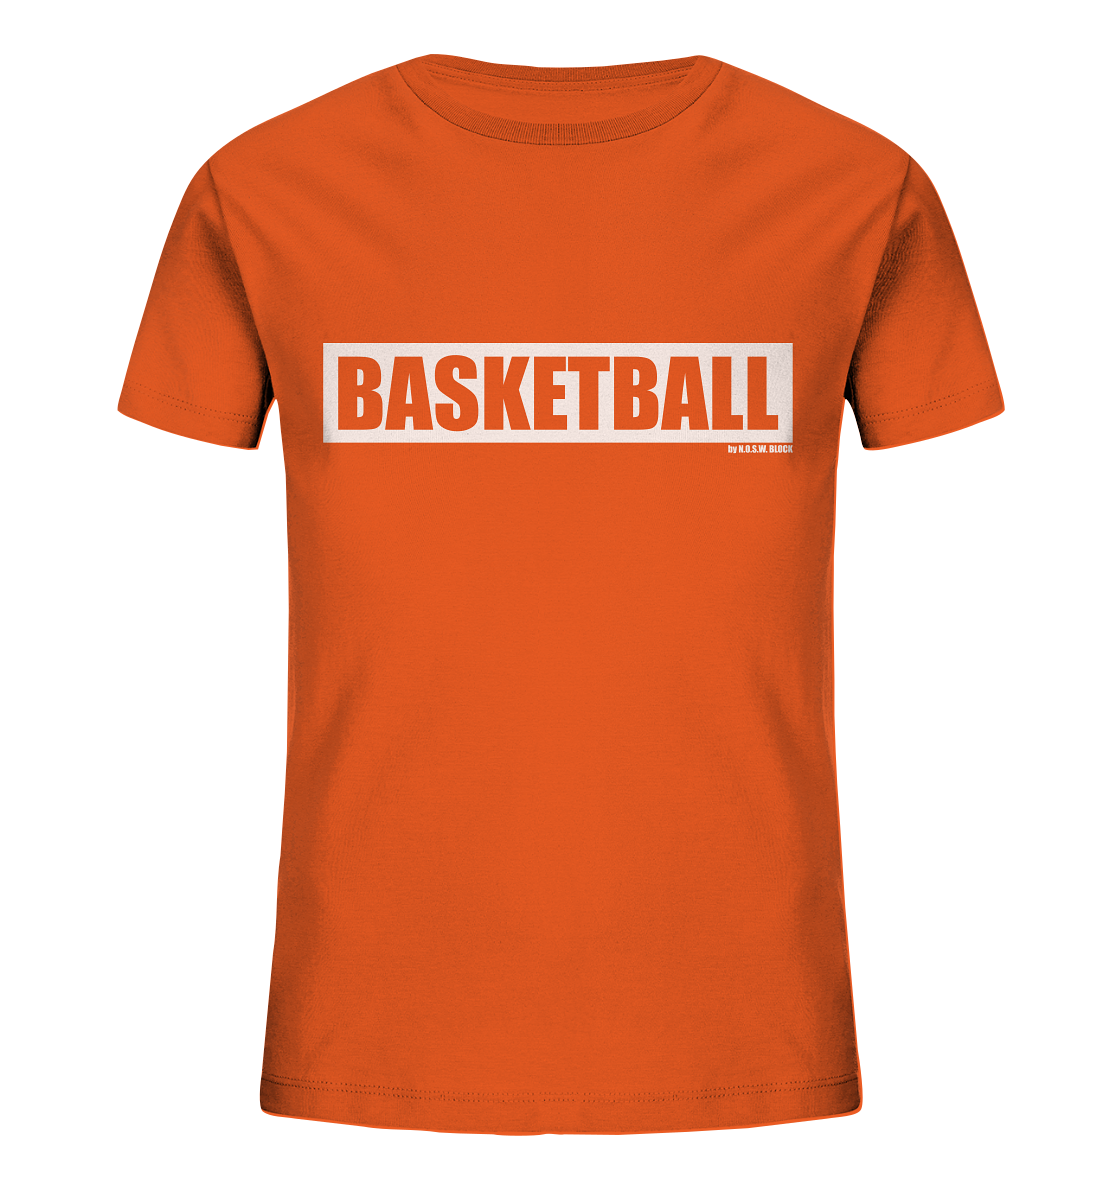 Teamsport Shirt "BASKETBALL" Kids UNISEX Organic T-Shirt orange